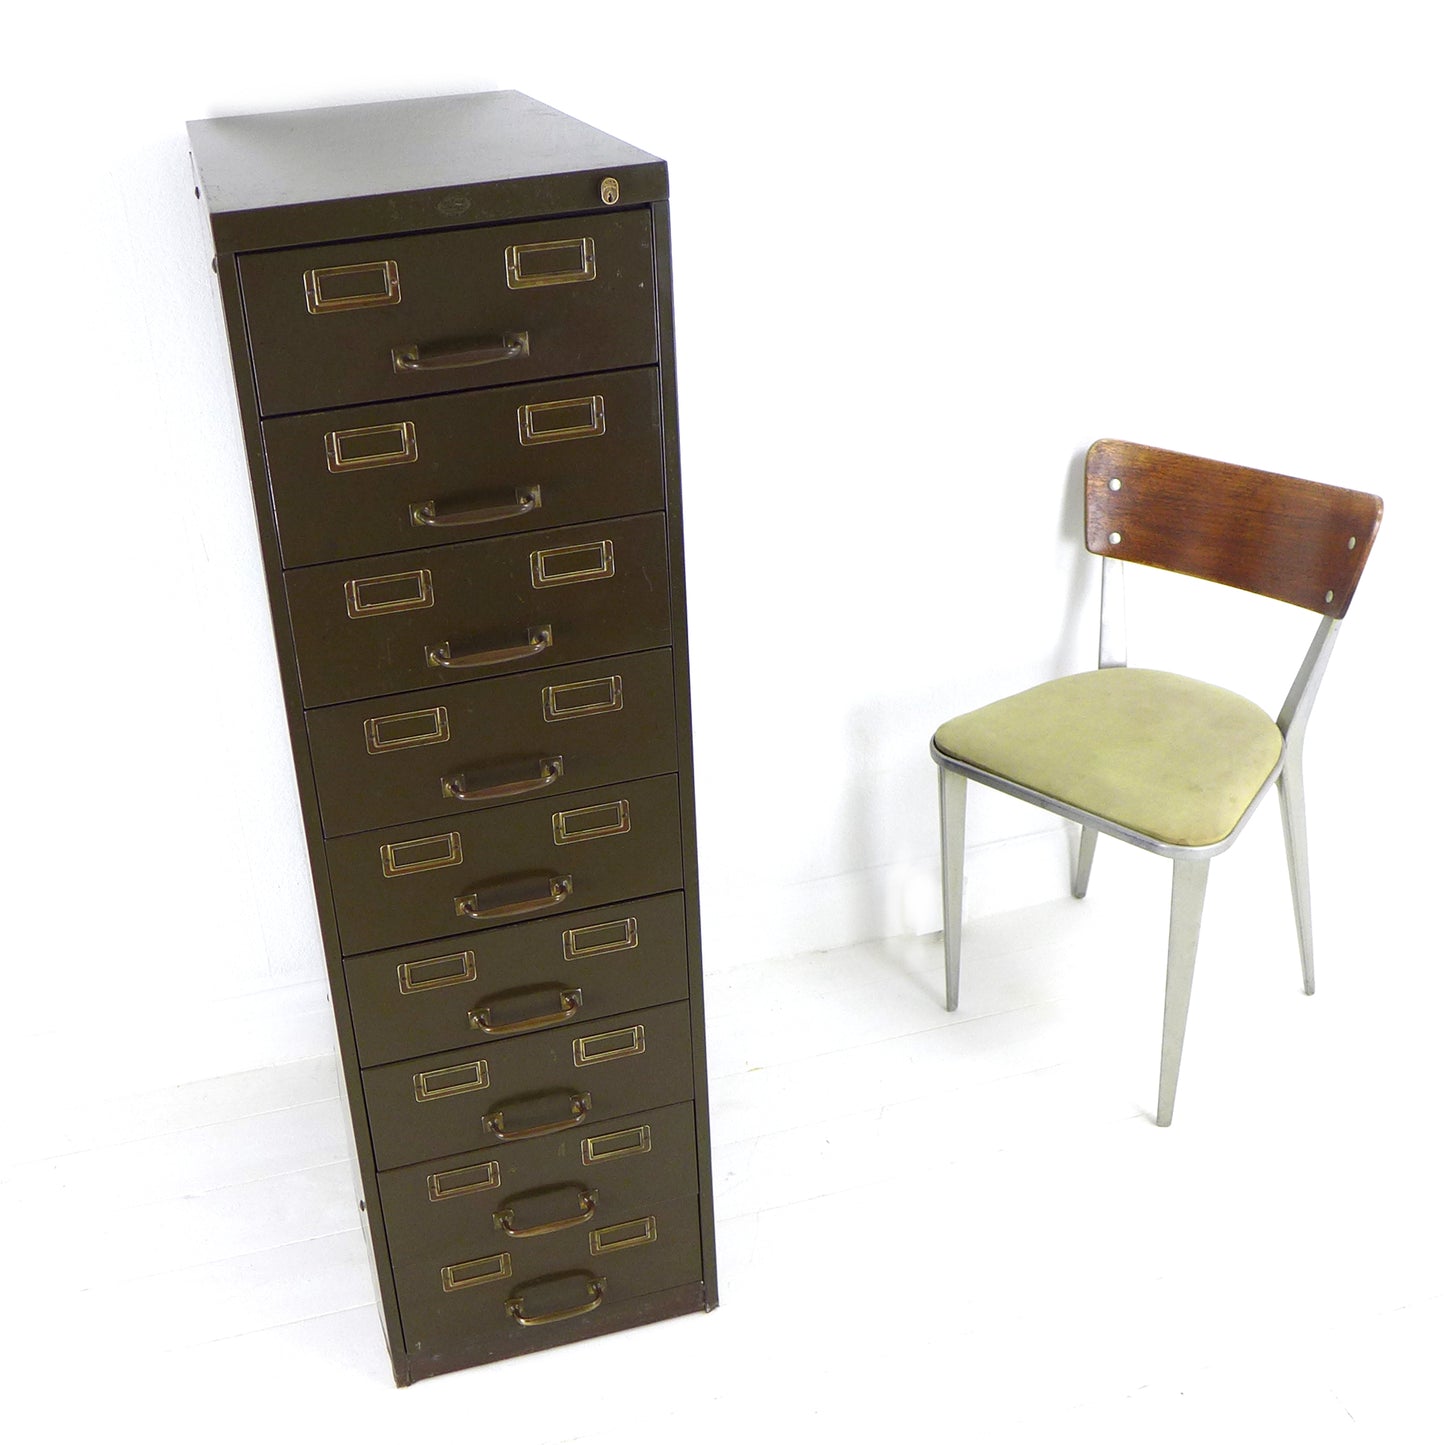 Vintage Metal Filing Cabinet by Artmetal - Brass Fittings - Industrial 9 Narrow Drawers in Green